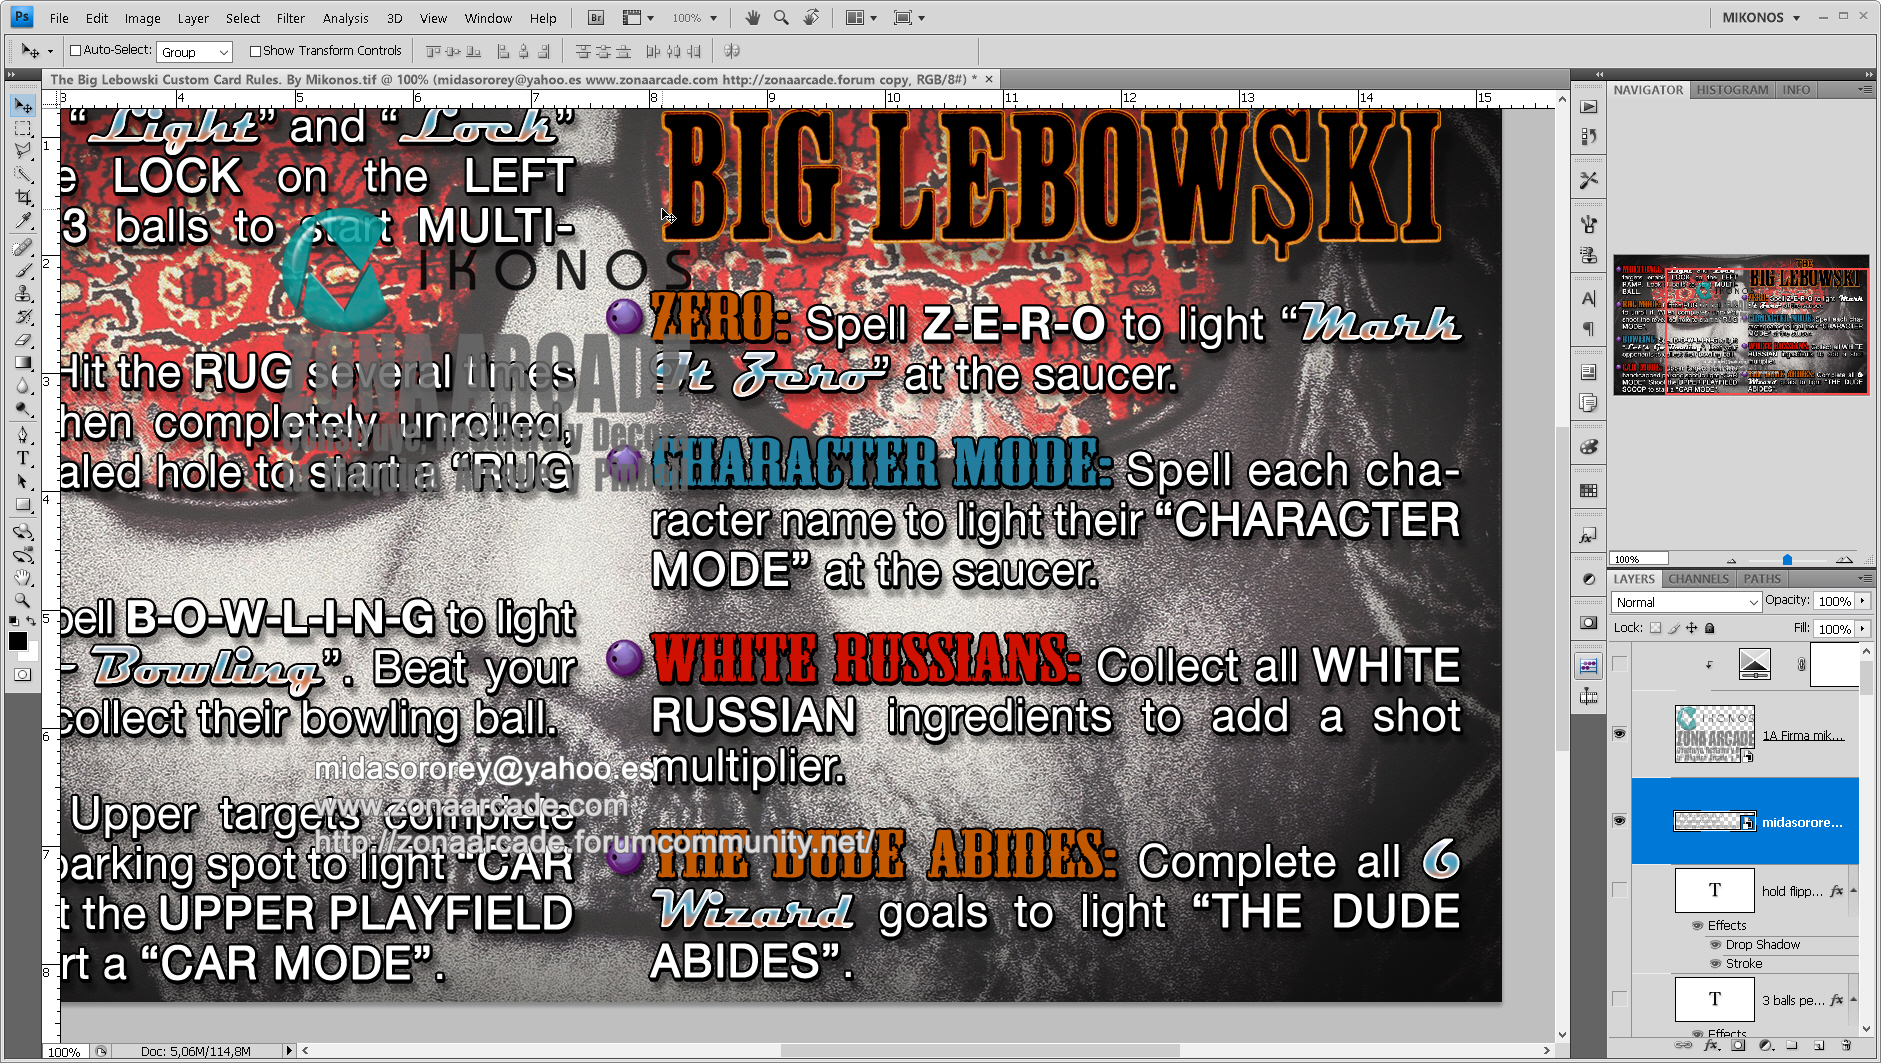 The Big Lebowski Custom Pinball Card Rules. Mikonos2